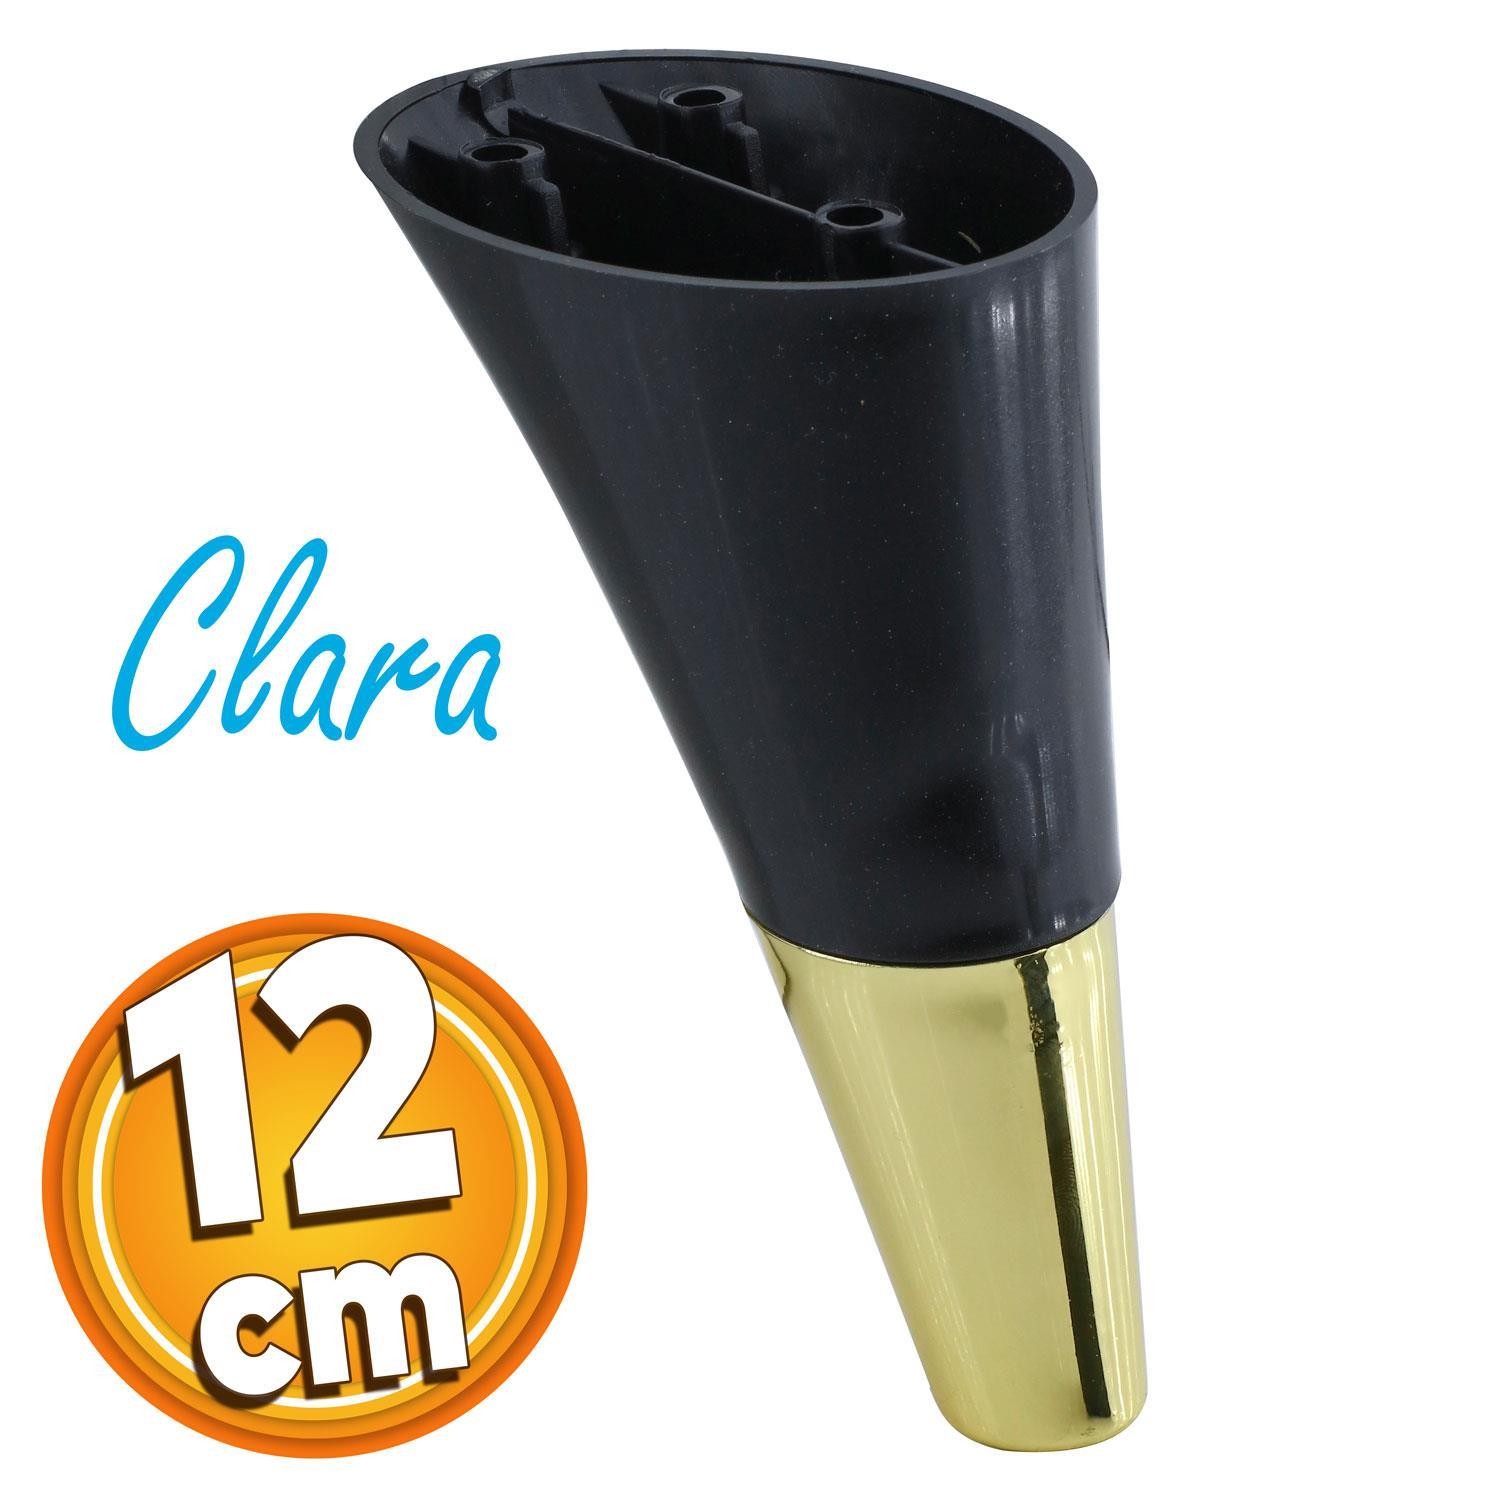 Clara Mobilya Kanepe Sehpa TV Ünitesi Baza Koltuk Ayağı Siyah Gold Renk 12 cm (4 Adet)